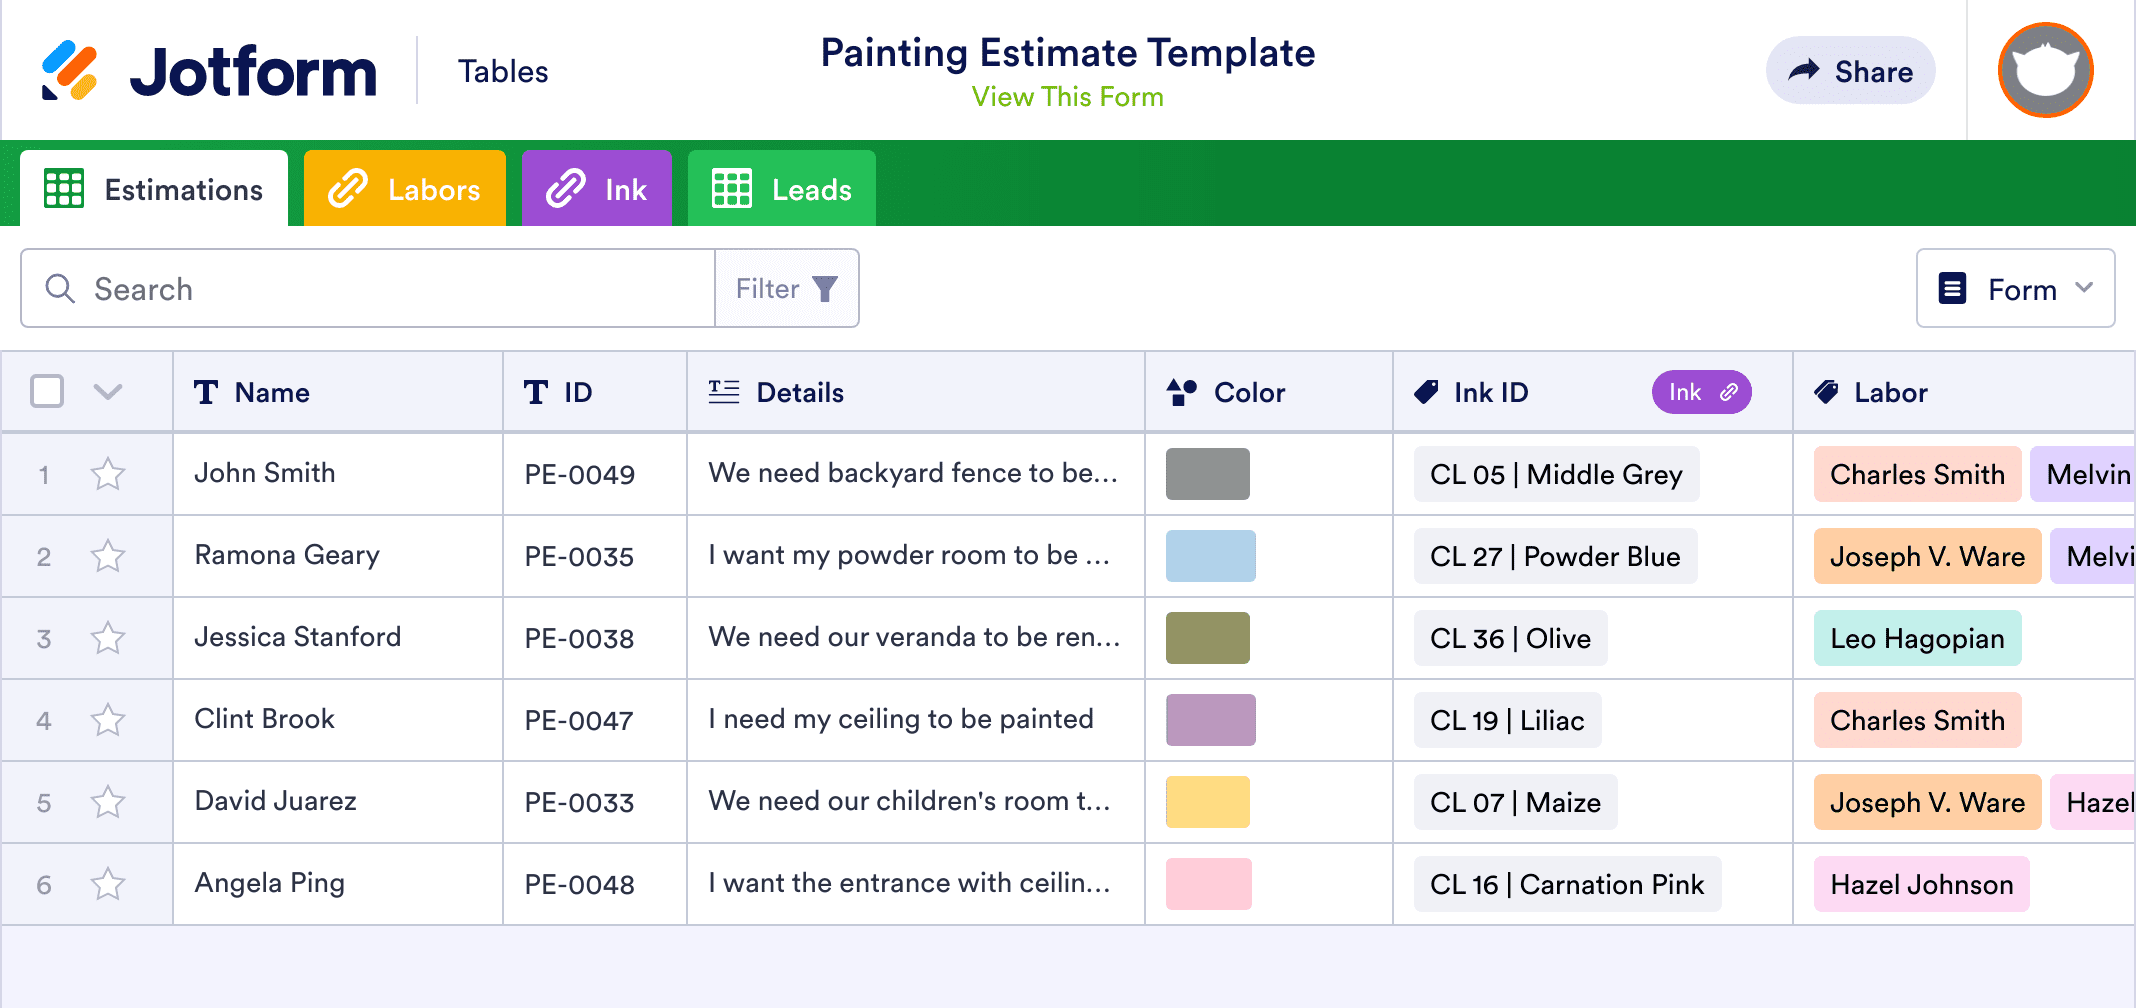 Painting Estimate Template